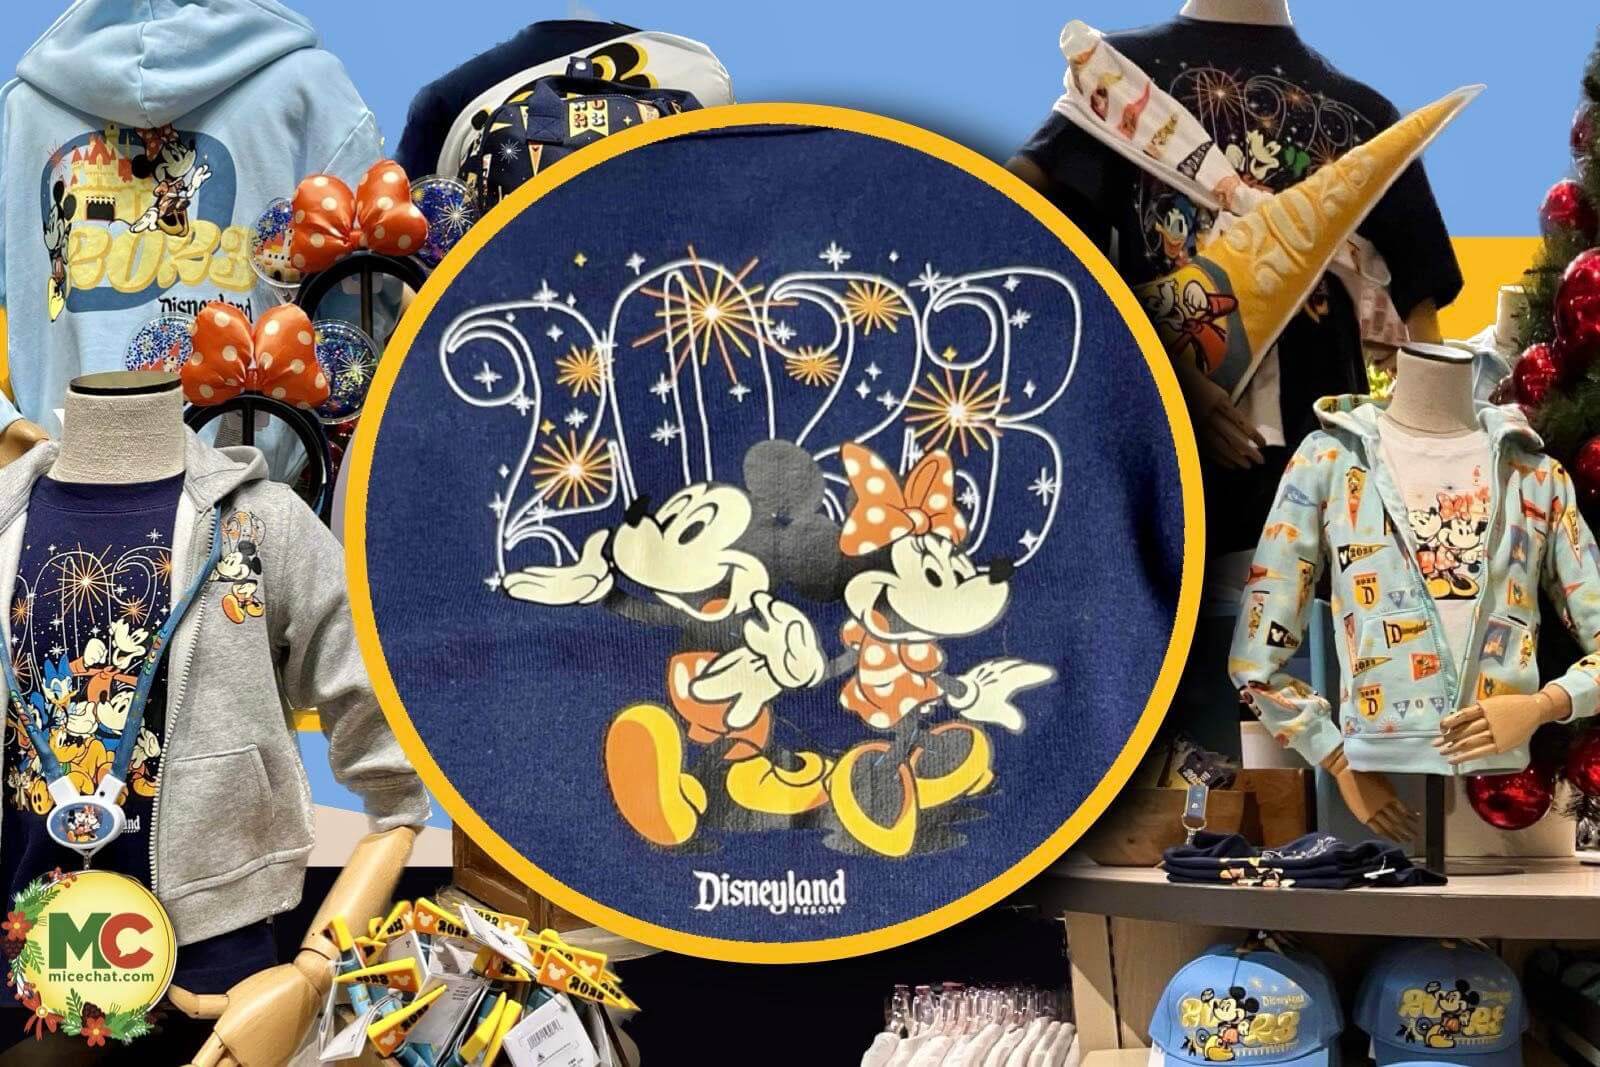 https://www.micechat.com/wp-content/uploads/2022/12/Disneyland-disney-2023-merchandise-collection.jpg